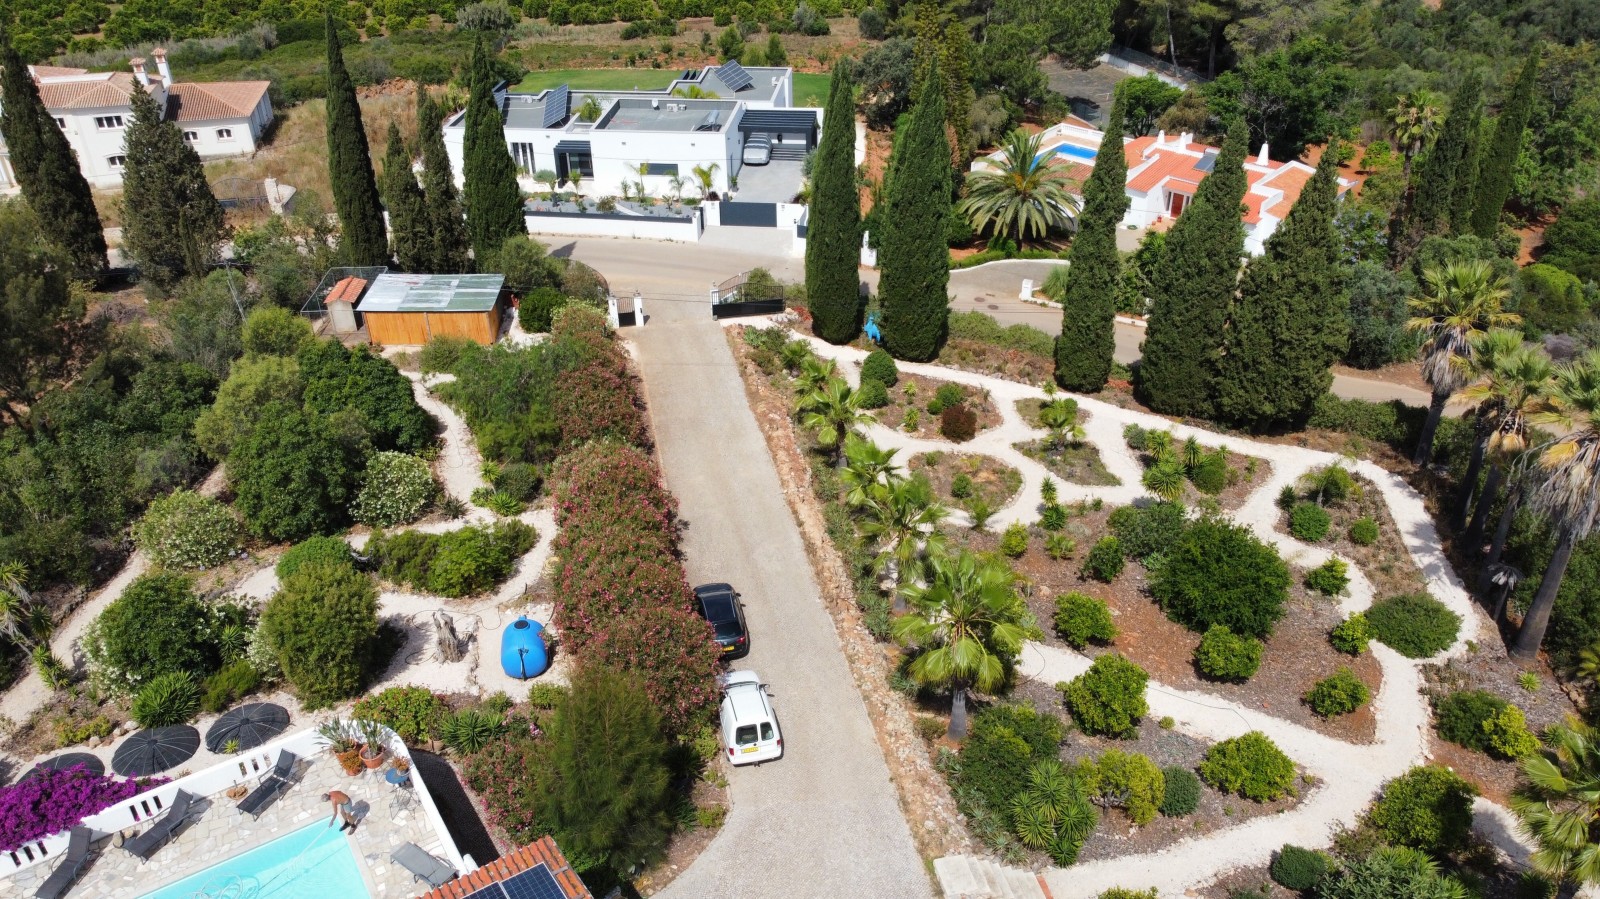 4 Bedroom Villa with swimming pool for sale in Monte Judeu, Algarve_228079